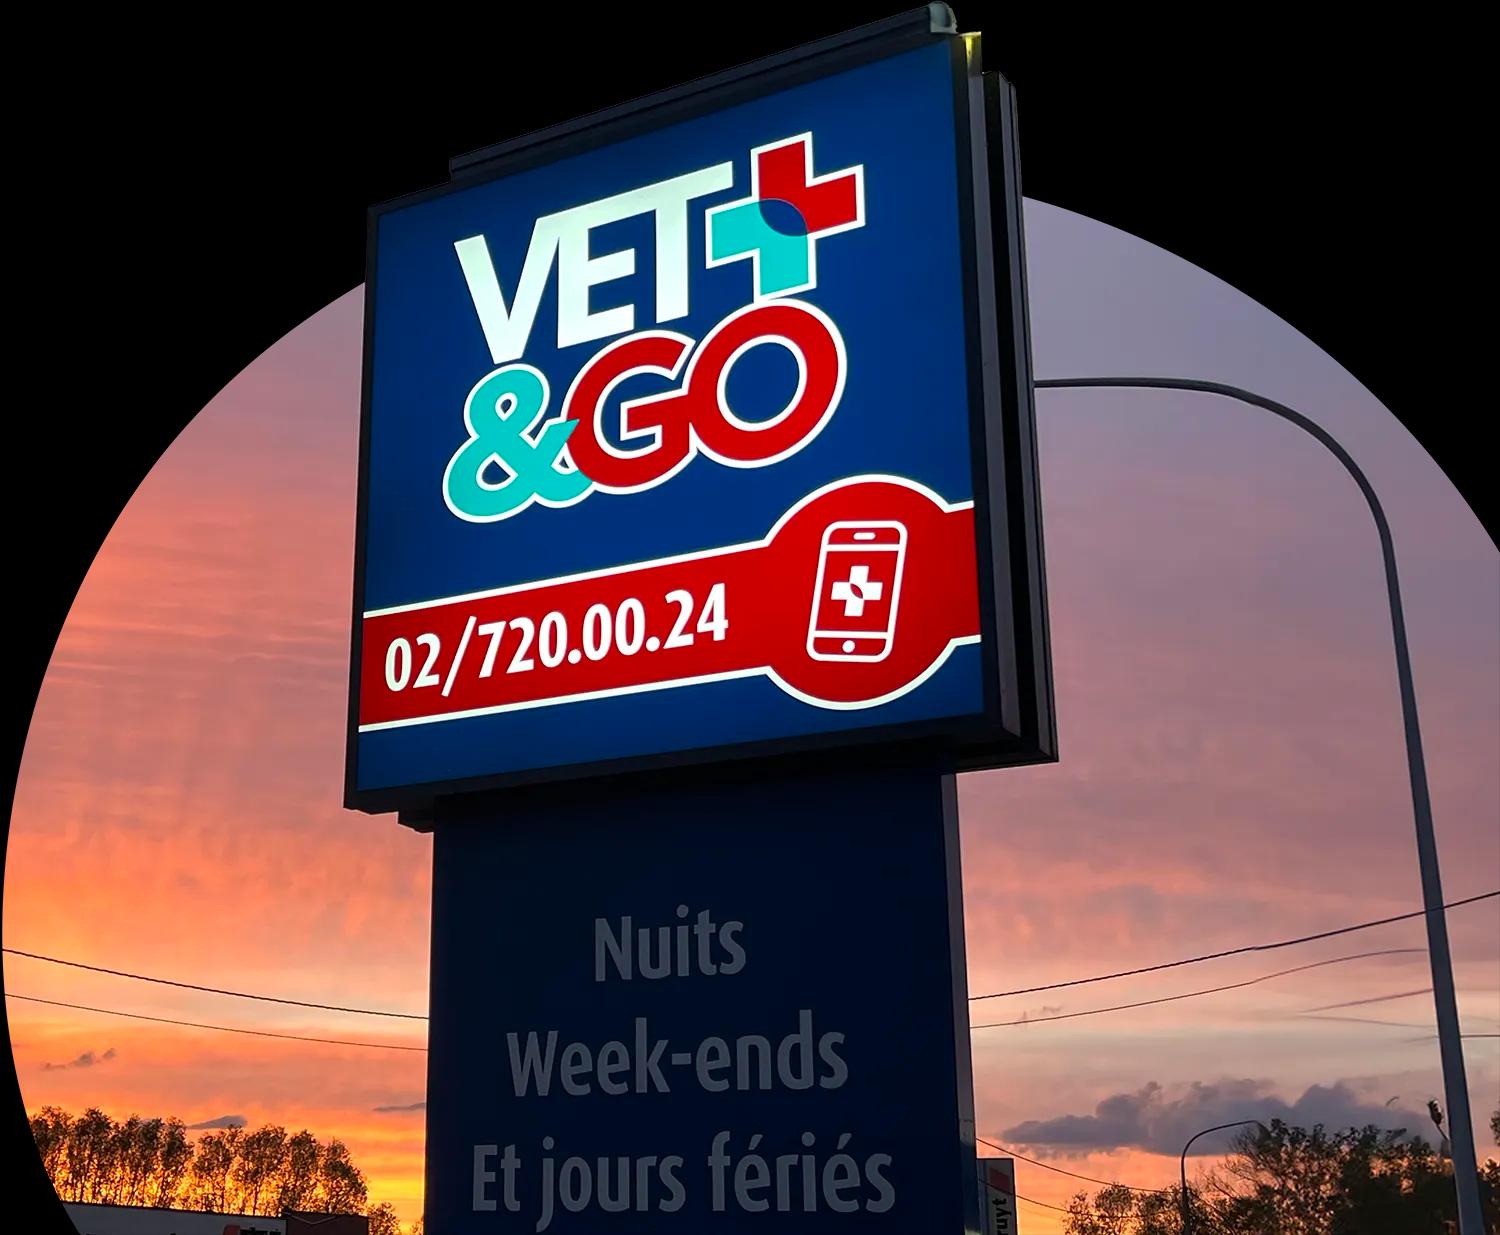 VET&GO signs at sunset